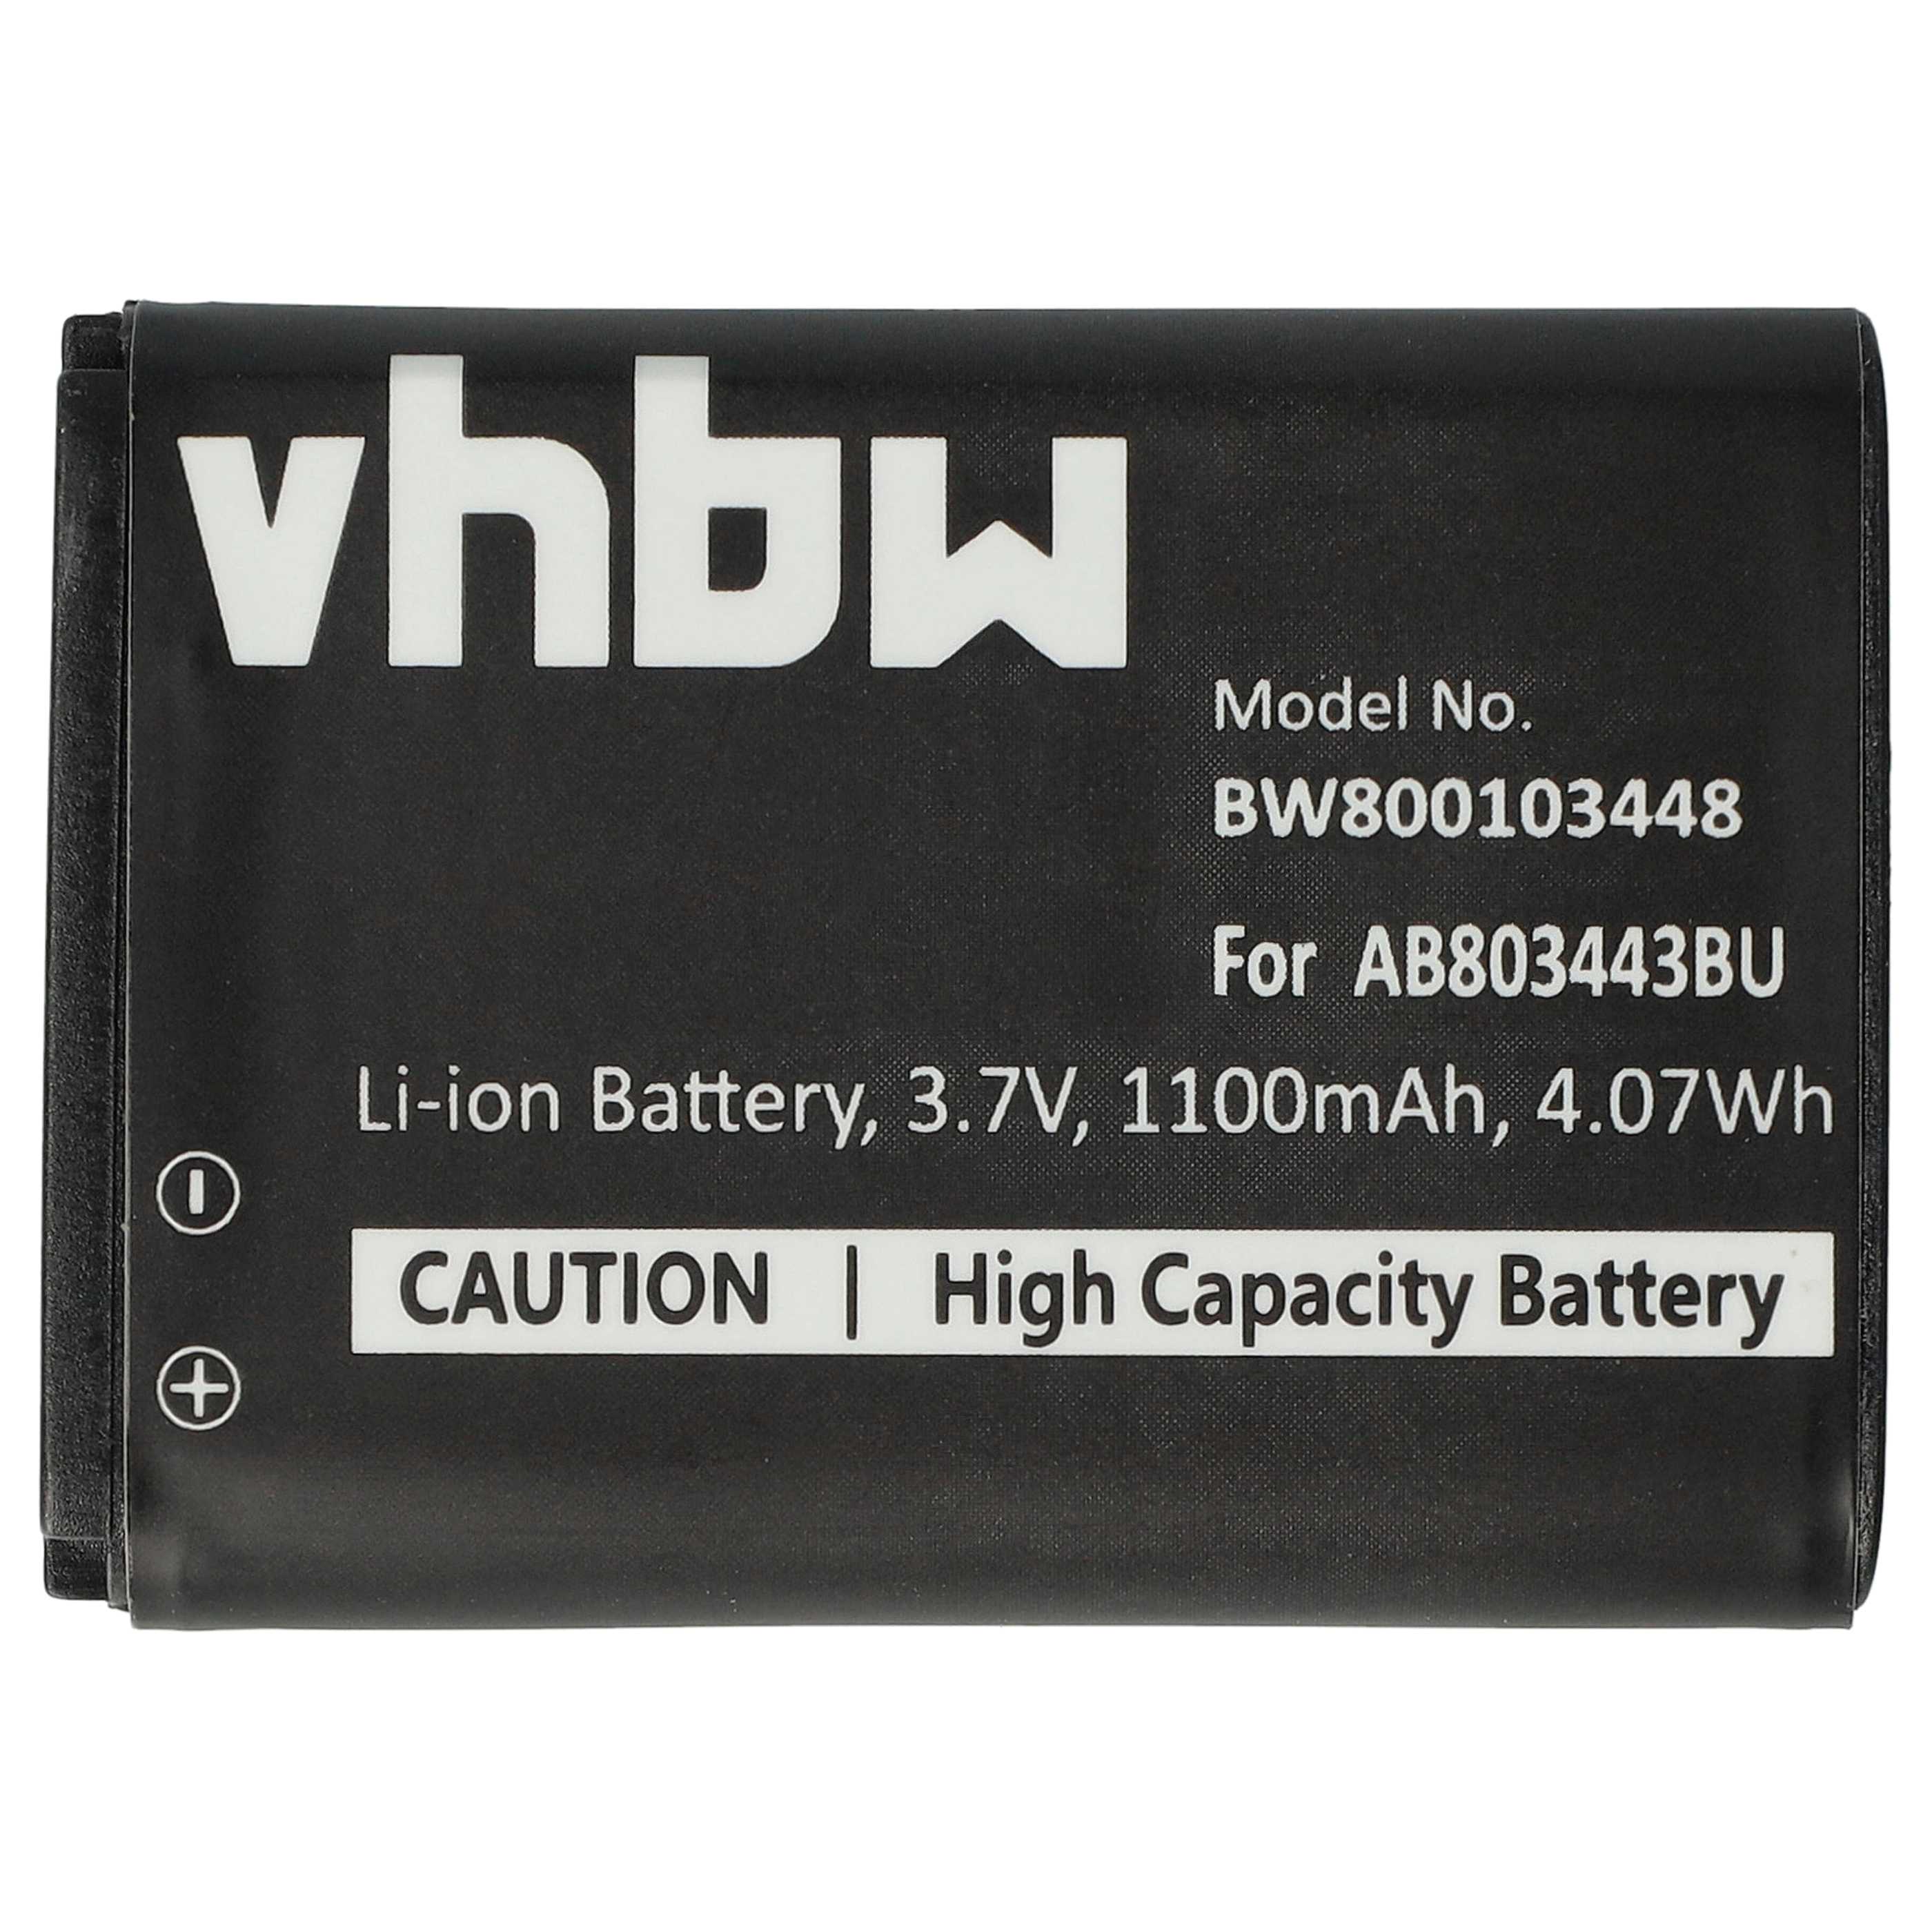 Akumulator bateria do telefonu smartfona zam. Samsung AB803443BU - 1100mAh, 3,7V, Li-Ion